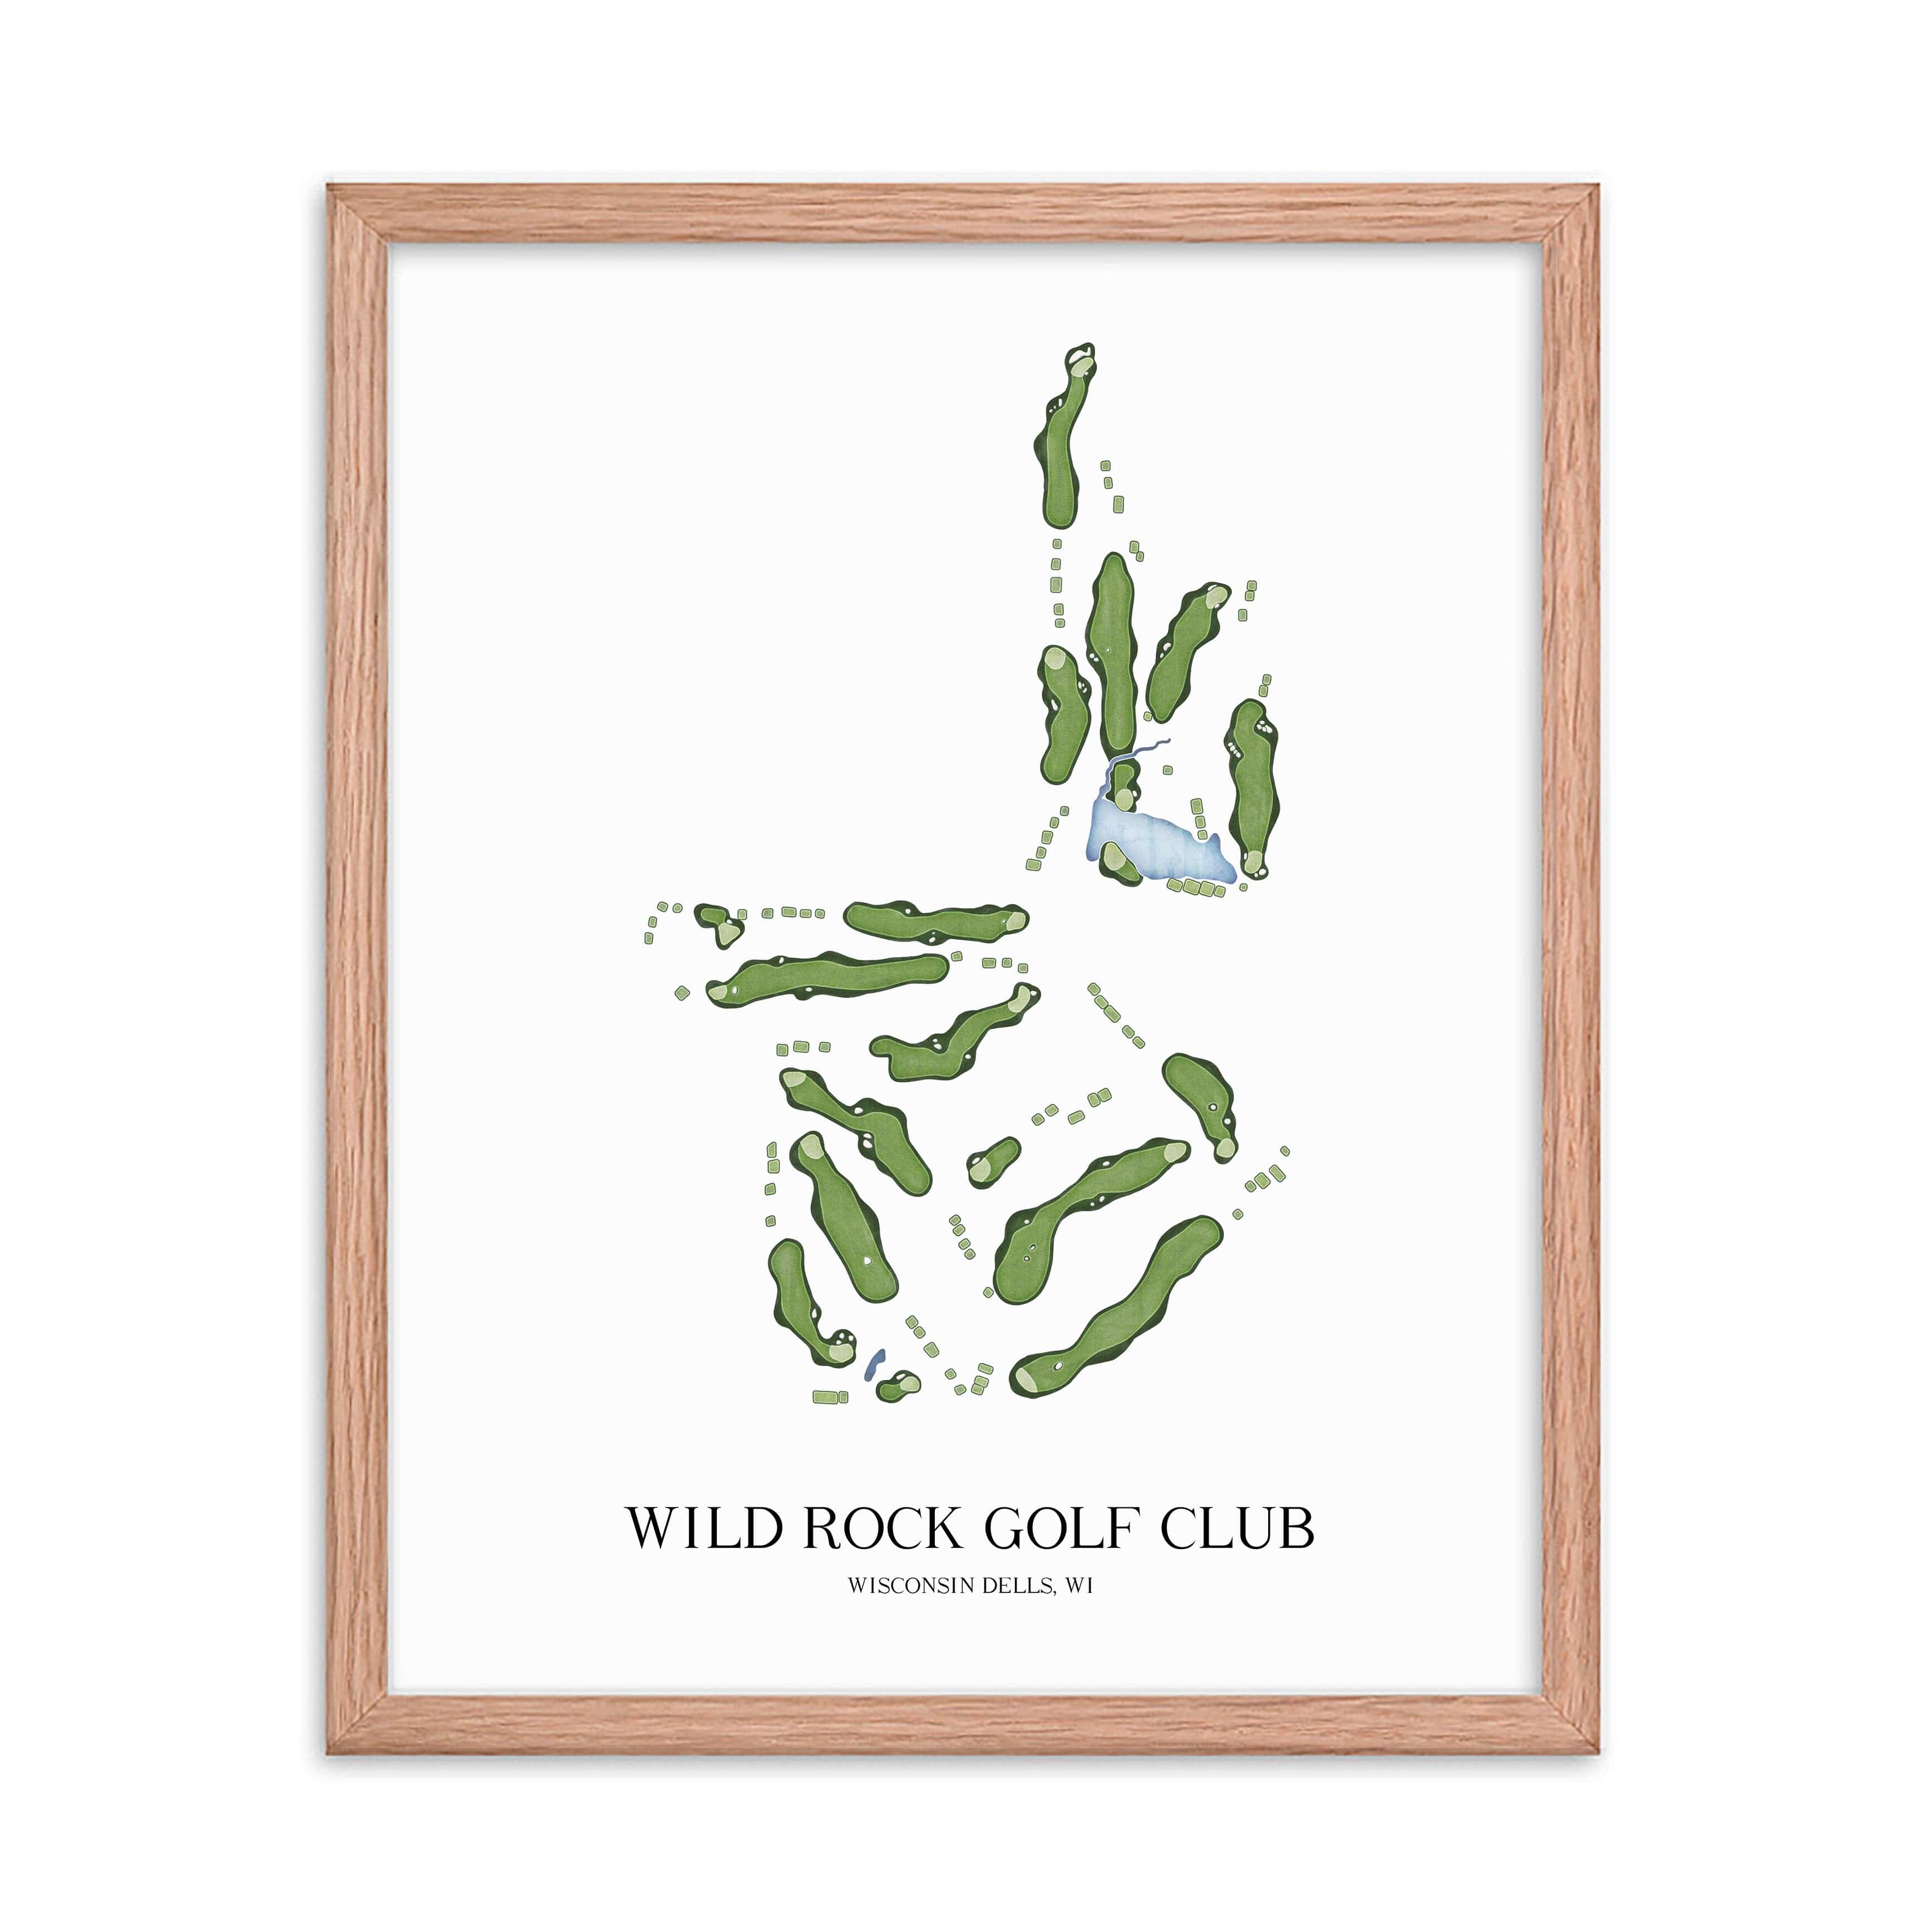 The 19th Hole Golf Shop - Golf Course Prints -  Wild Rock Golf Club Golf Course Map